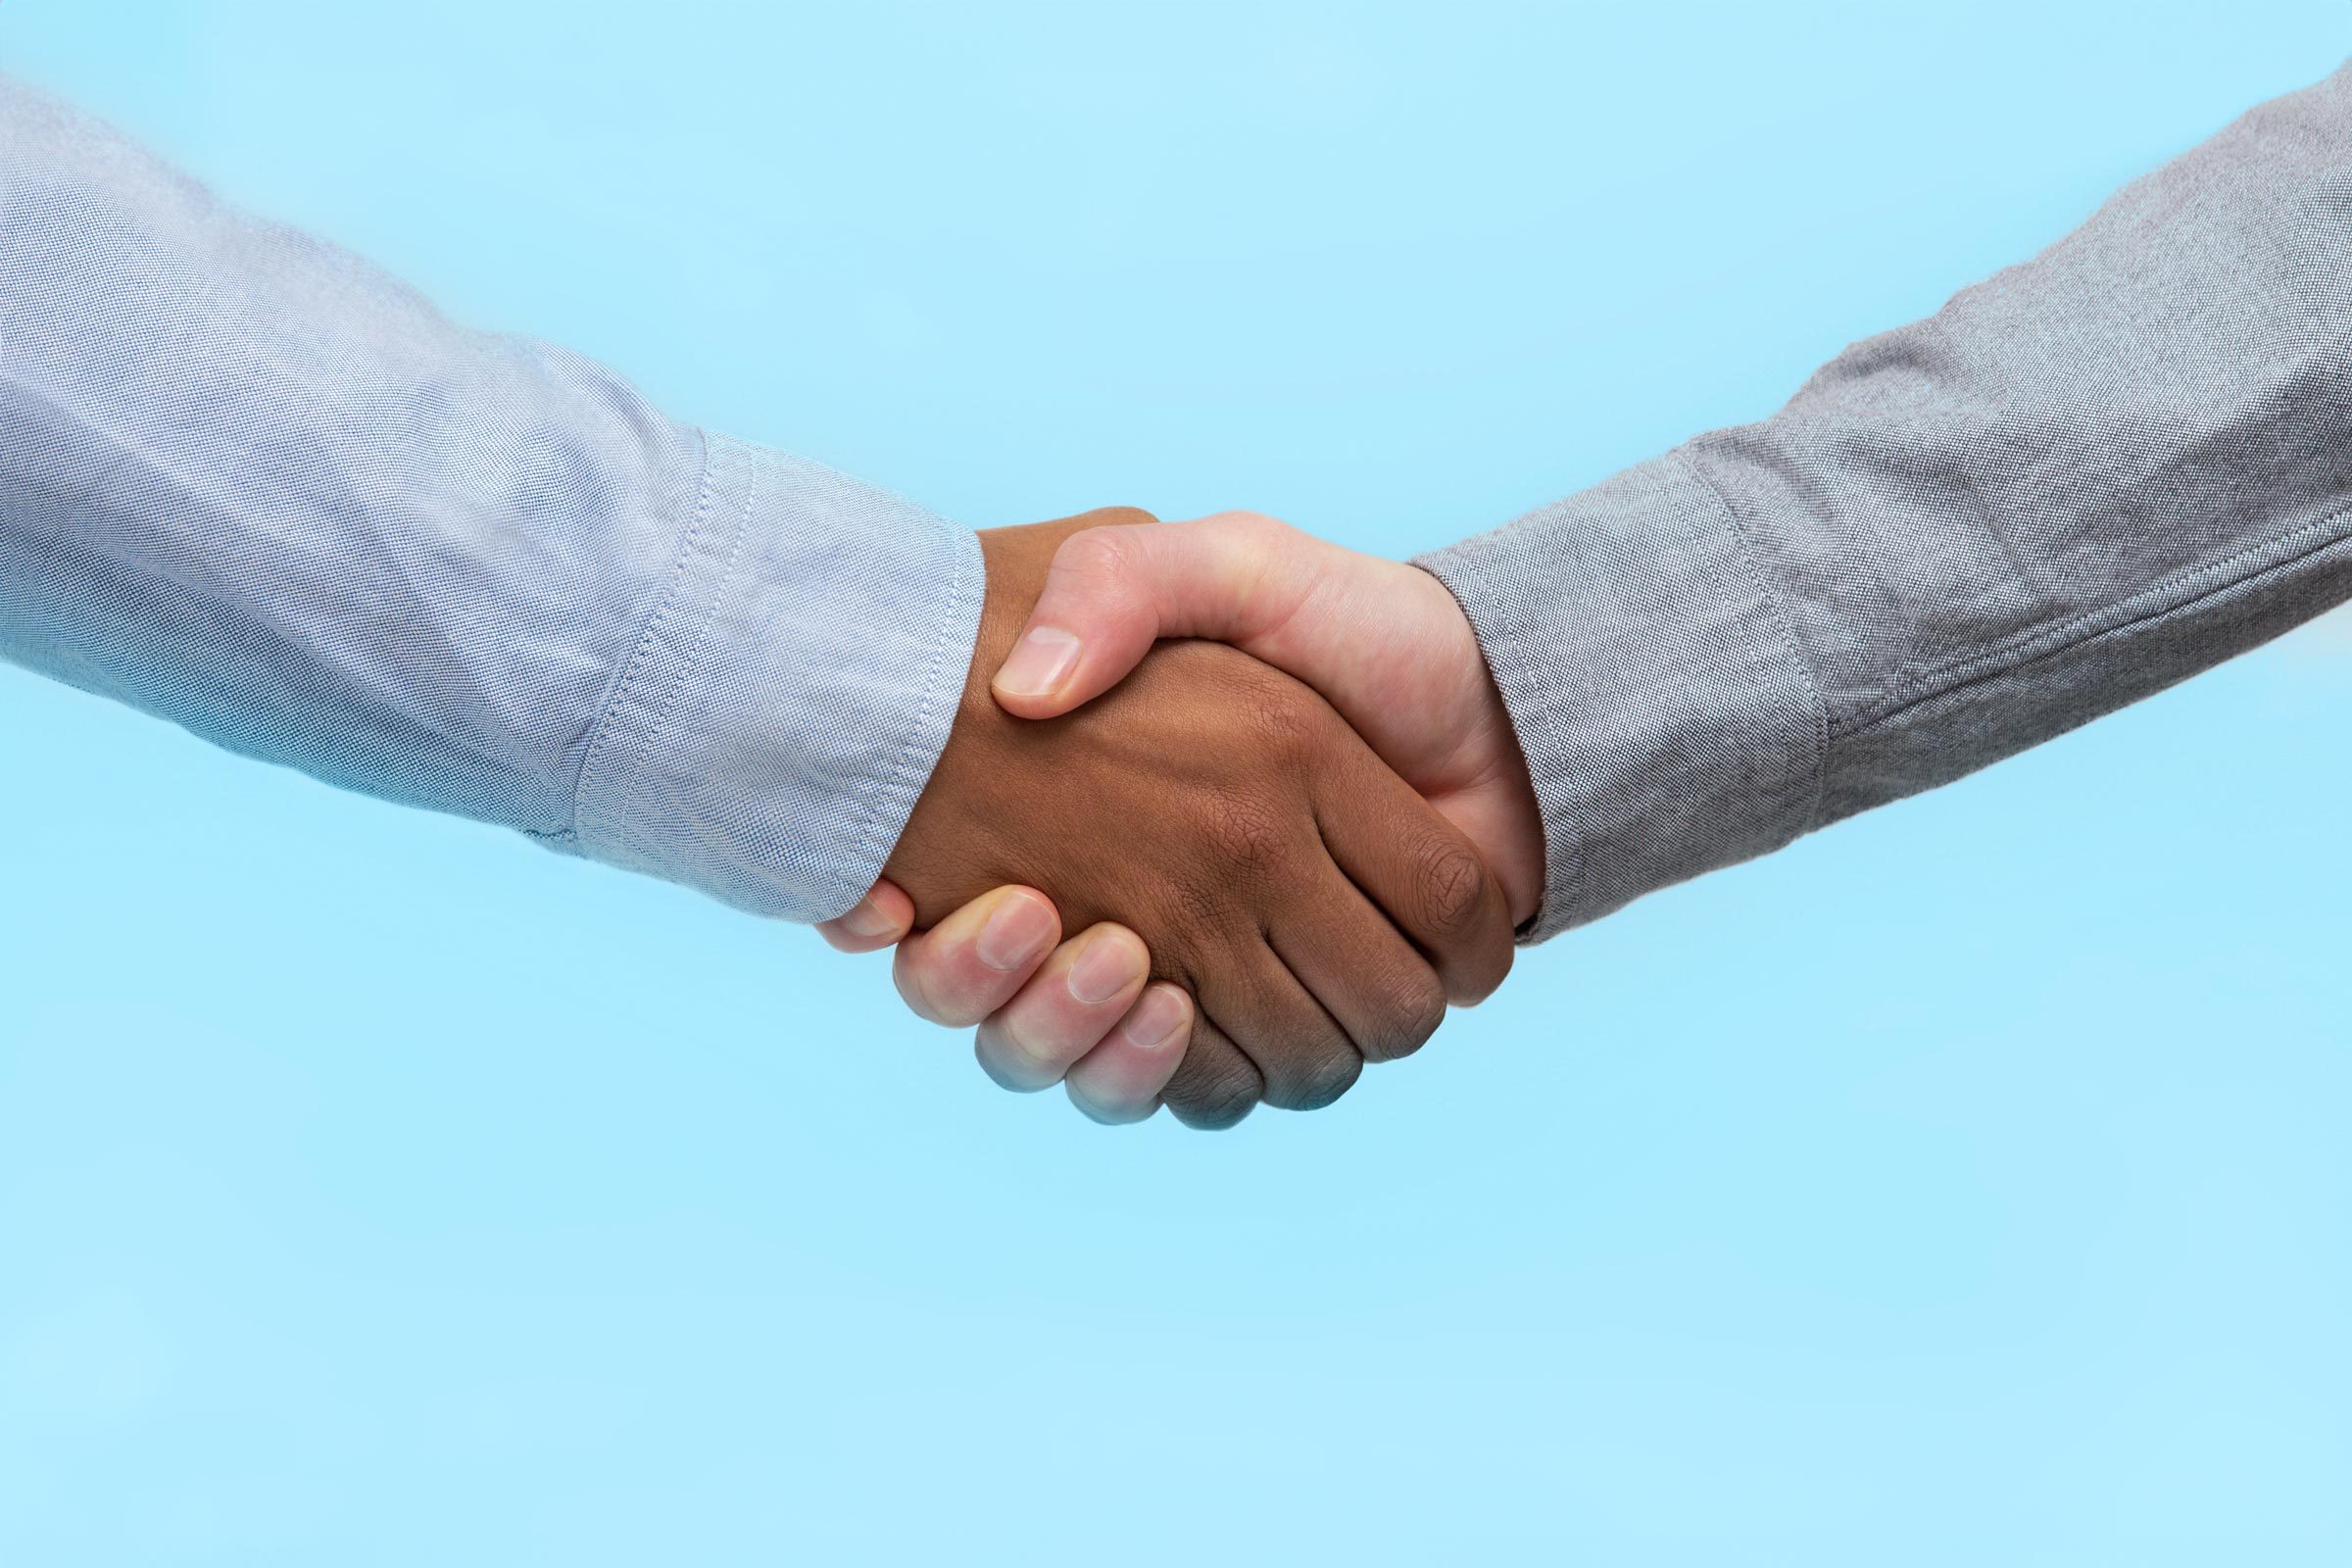 shaking hands on blue background